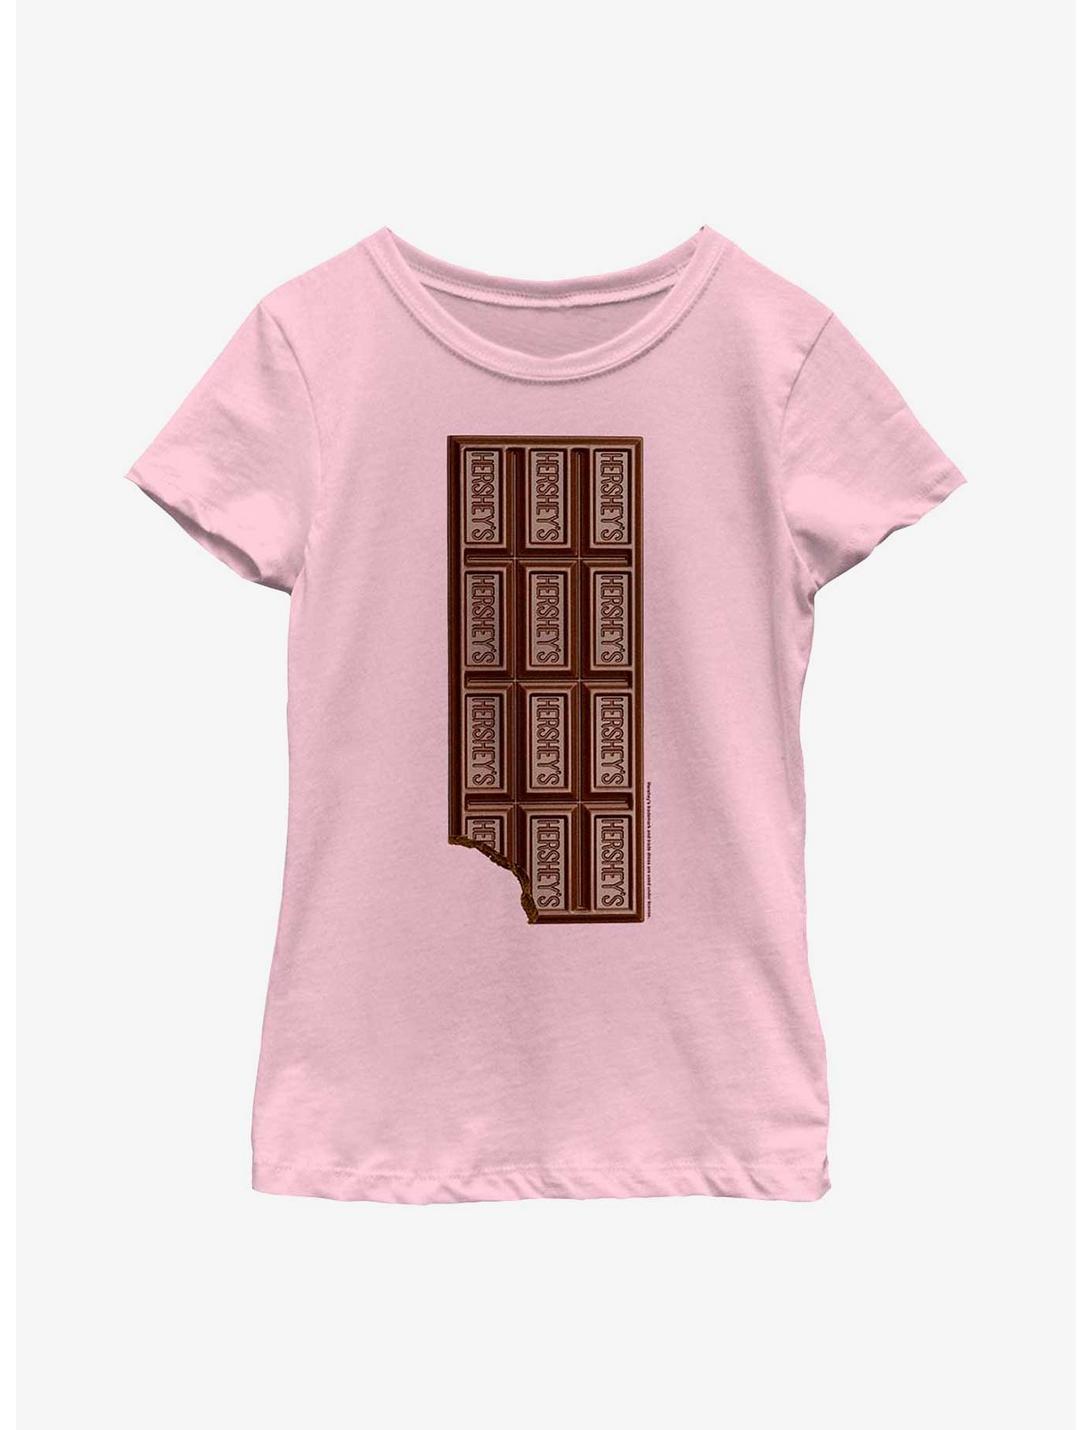 Hershey's Chocolate Bar Bite Youth Girls T-Shirt, PINK, hi-res